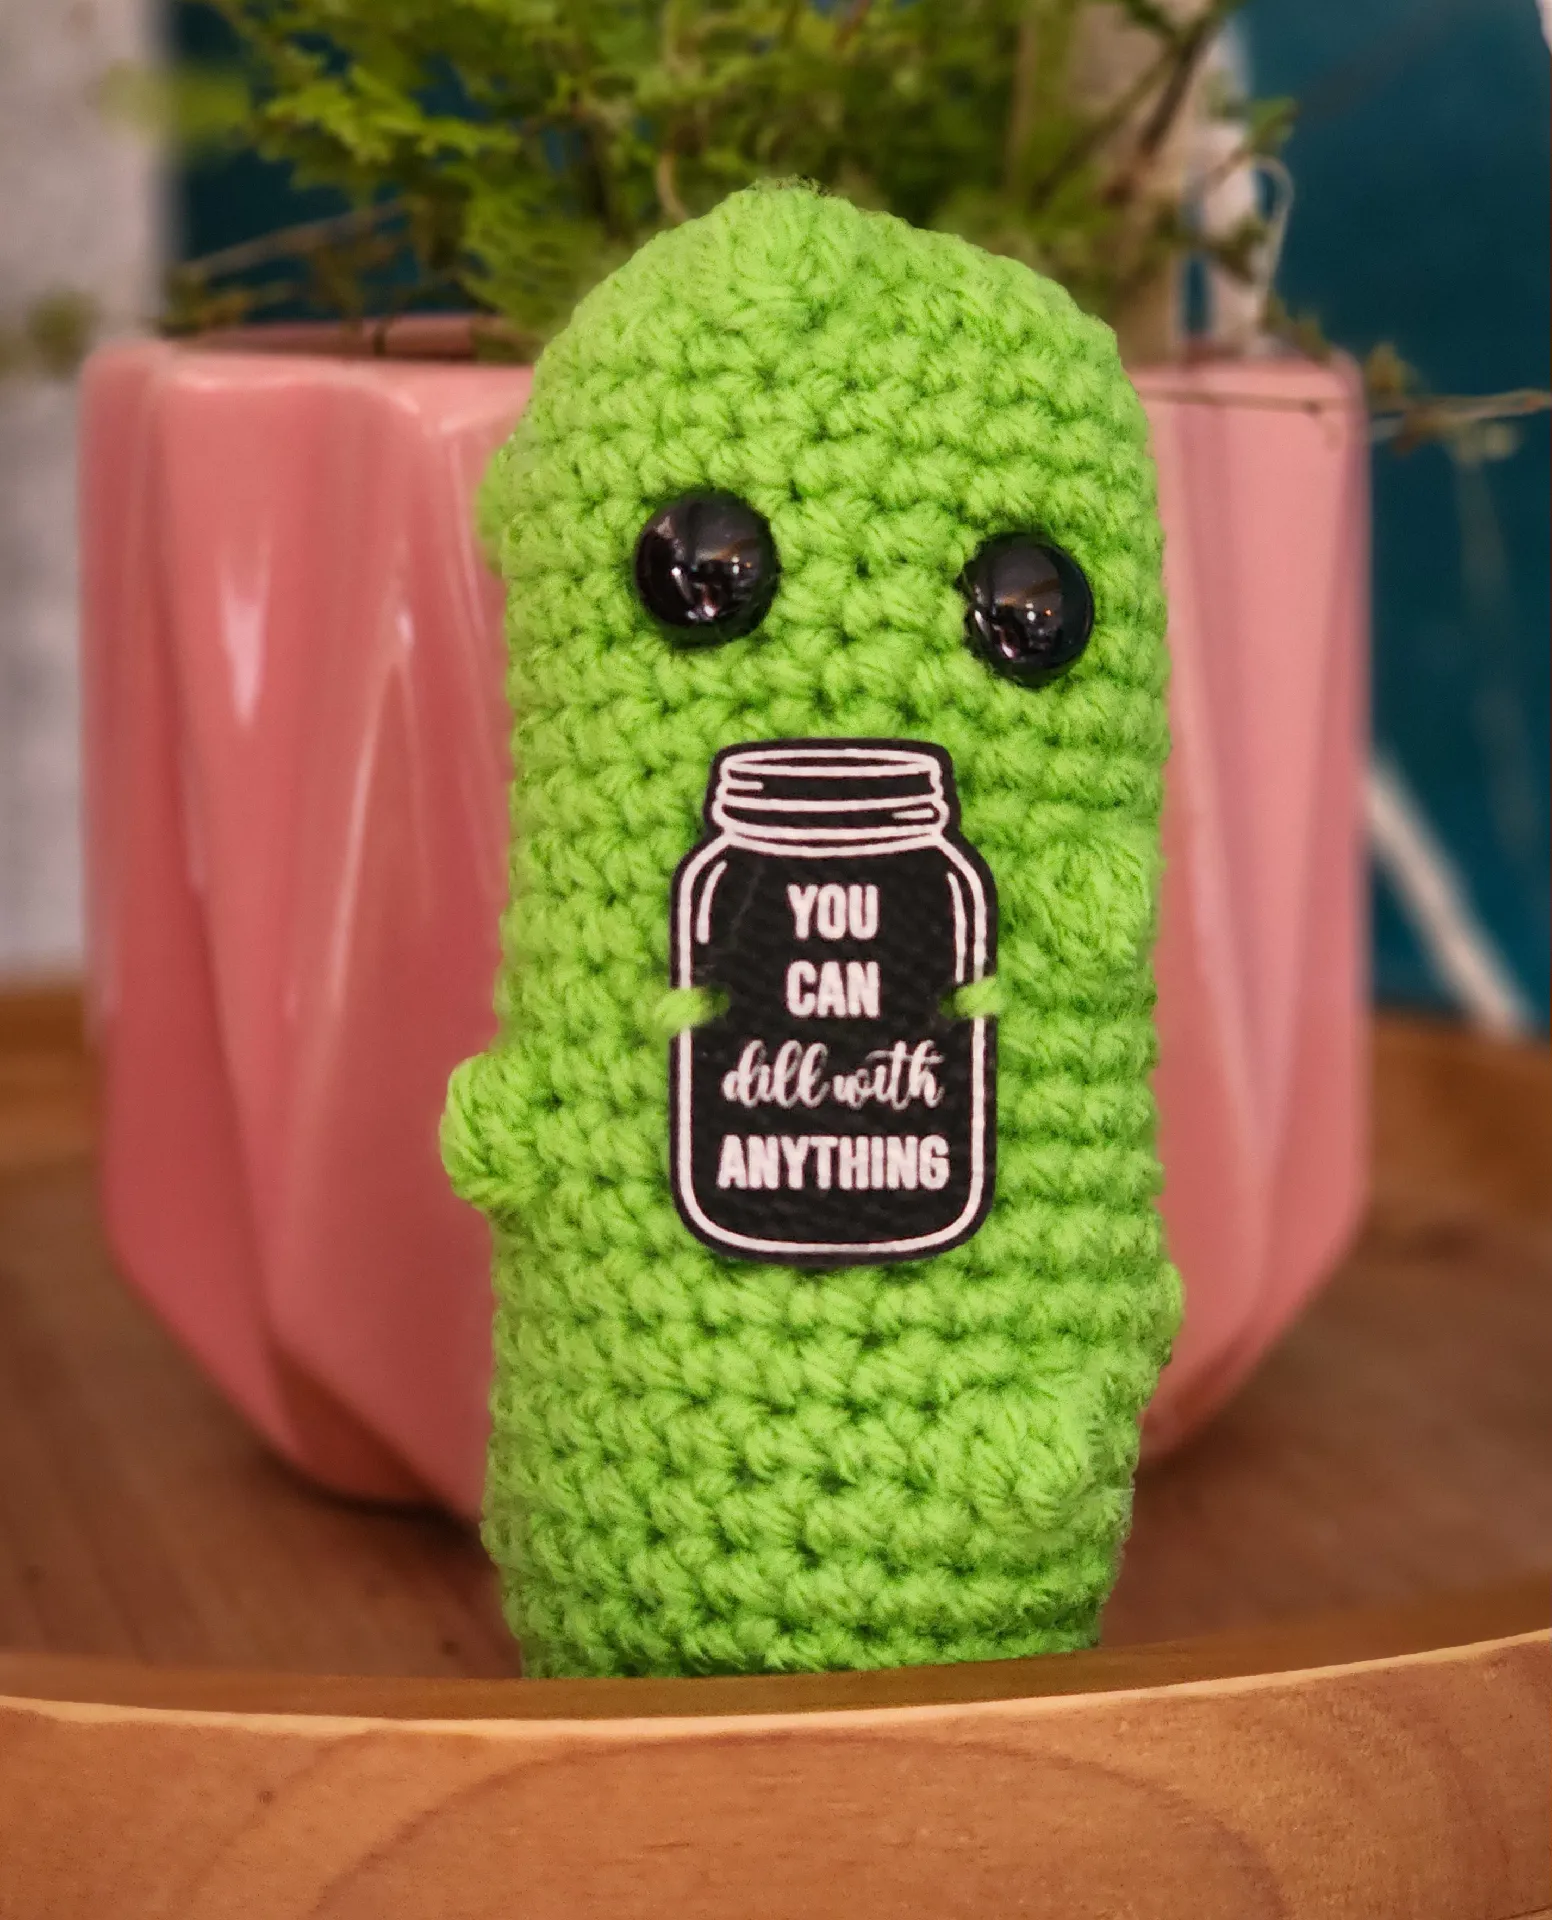 1/5X Crochet Emotional Support Handmade Emotional-Support Pickled